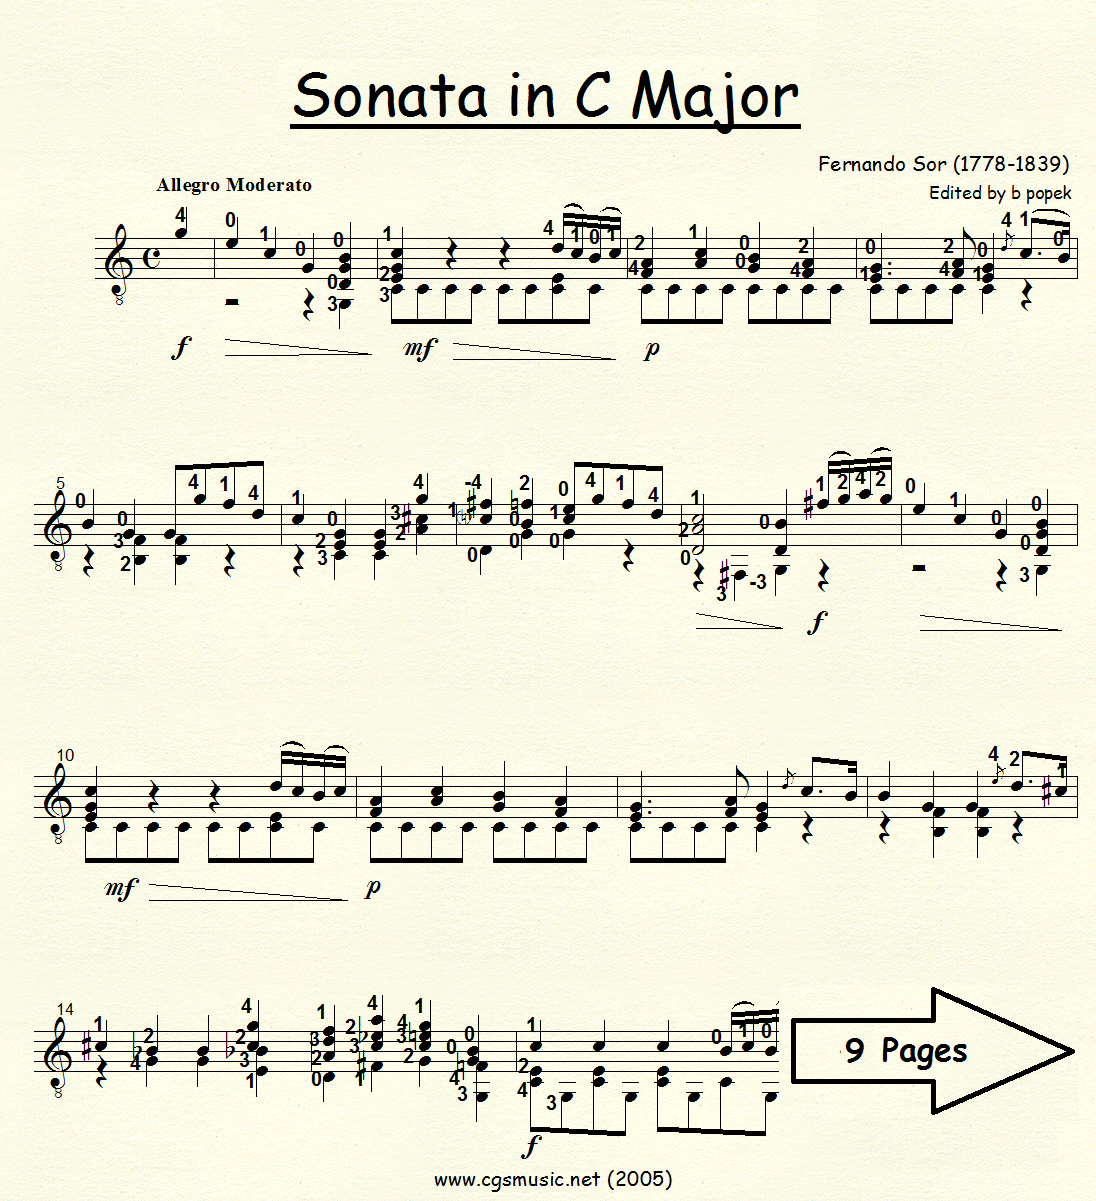 Sonata in C Major (Sor) for Classical Guitar in Standard Notation